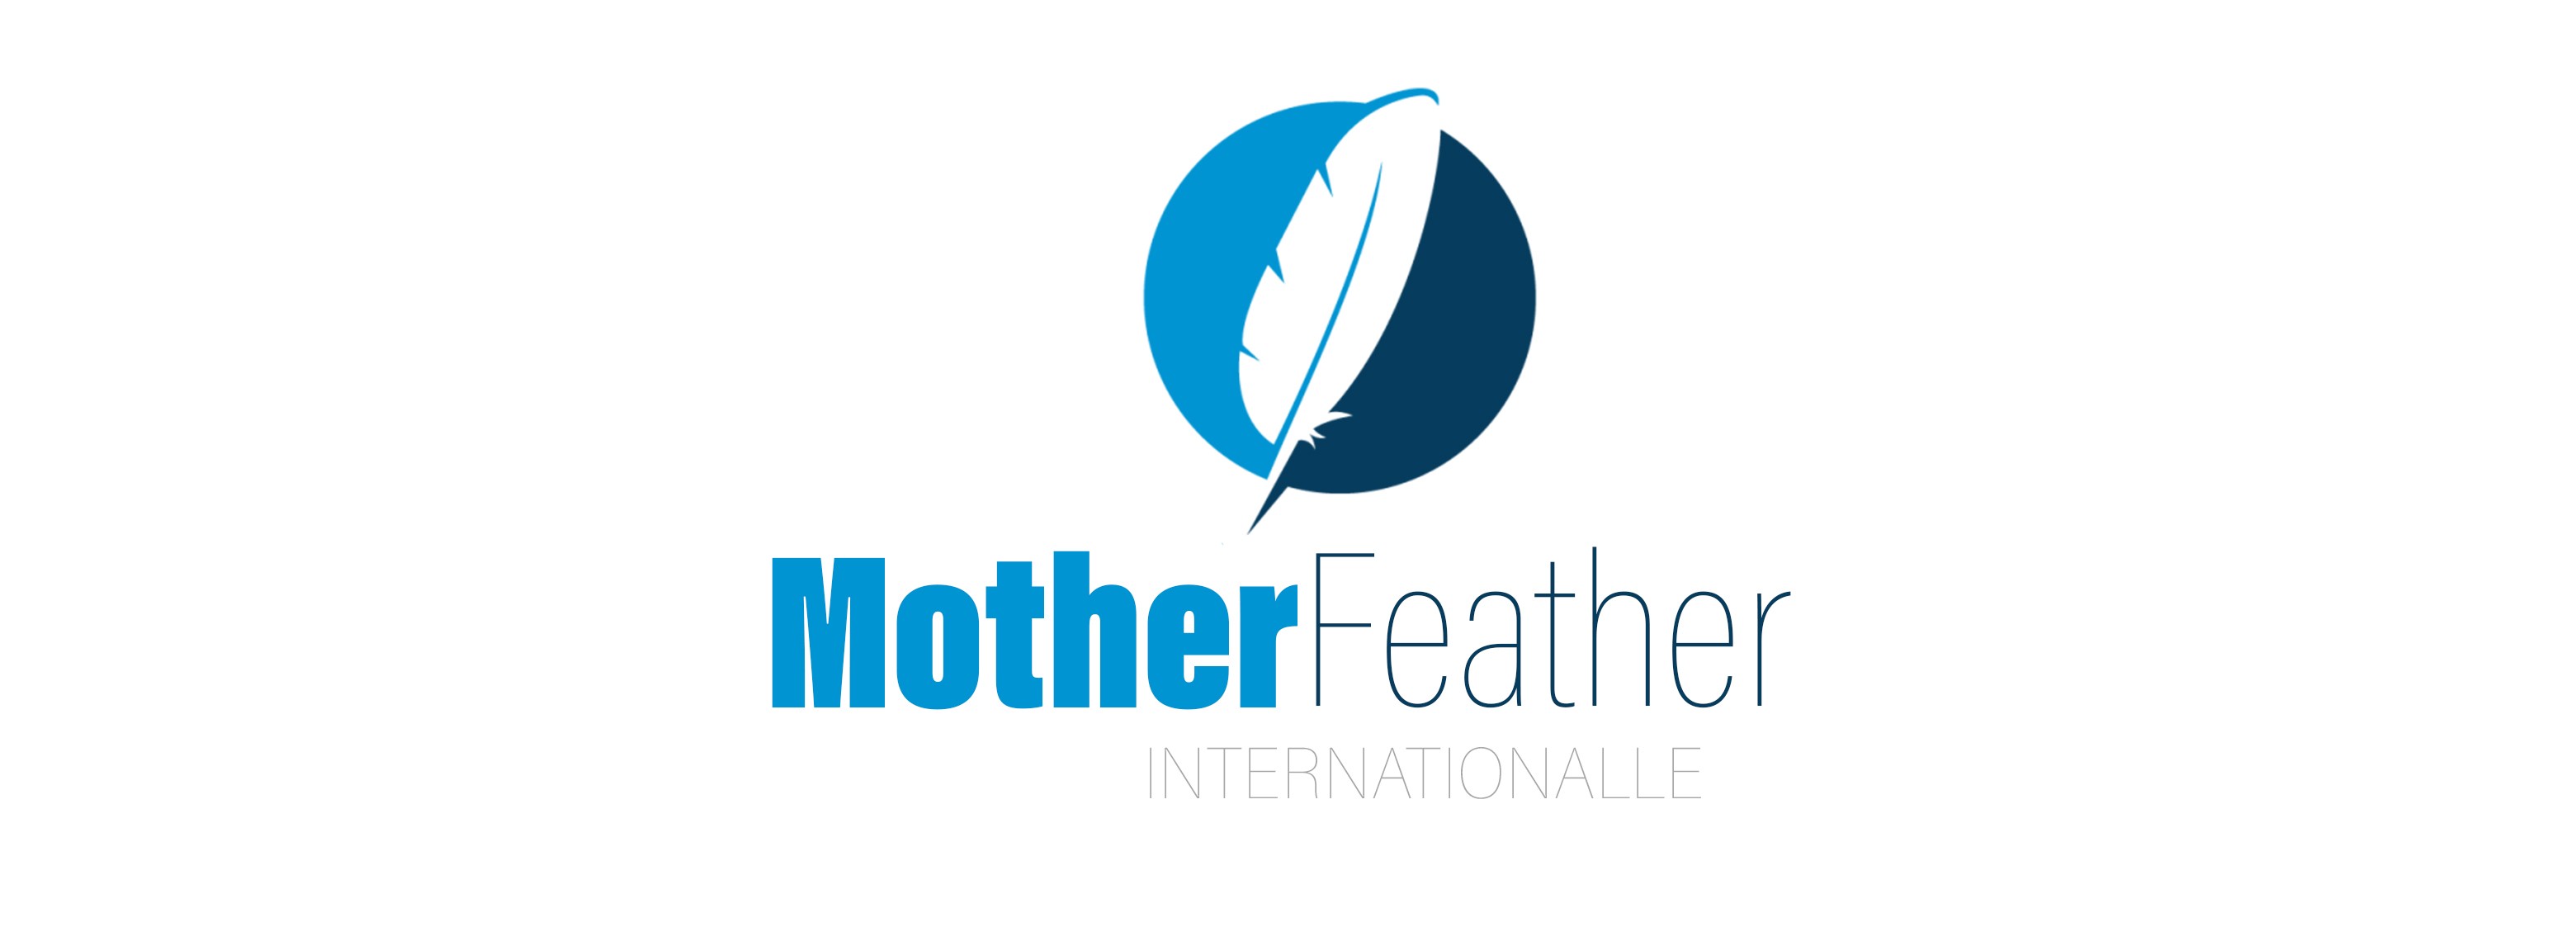 MotherFather